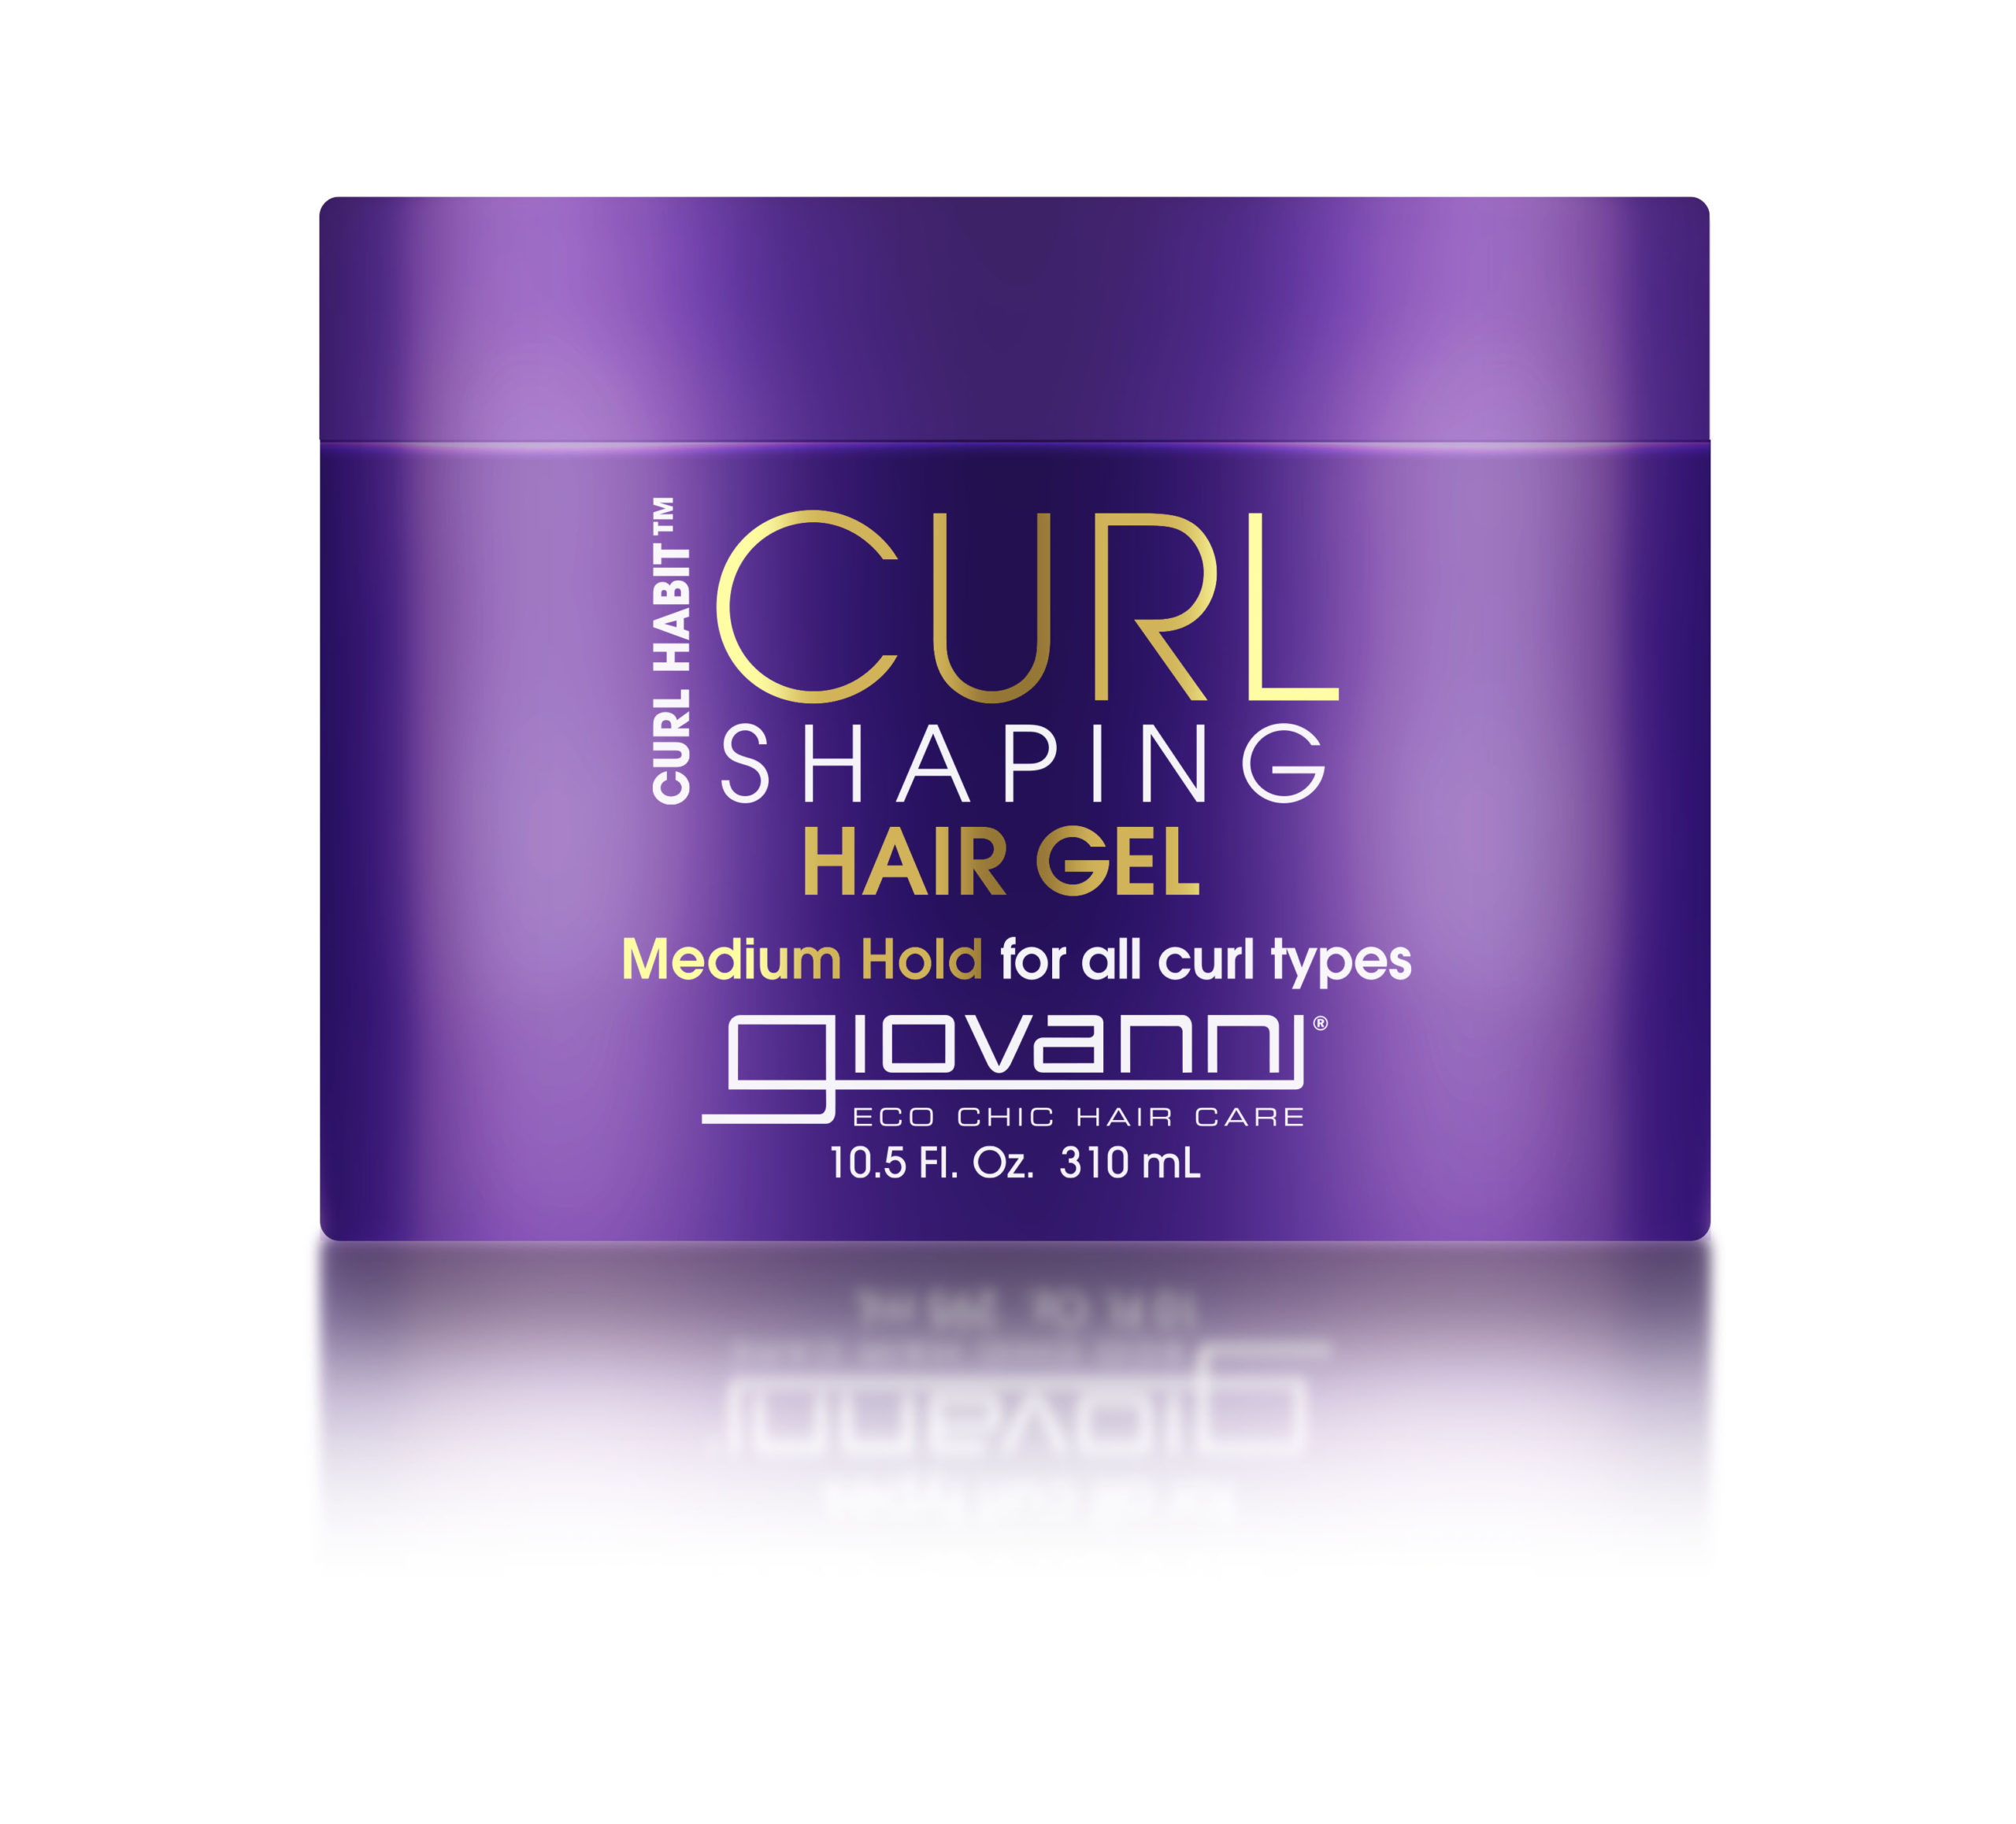 Giovanni Cosmetics Curl Shaping Hair Gel